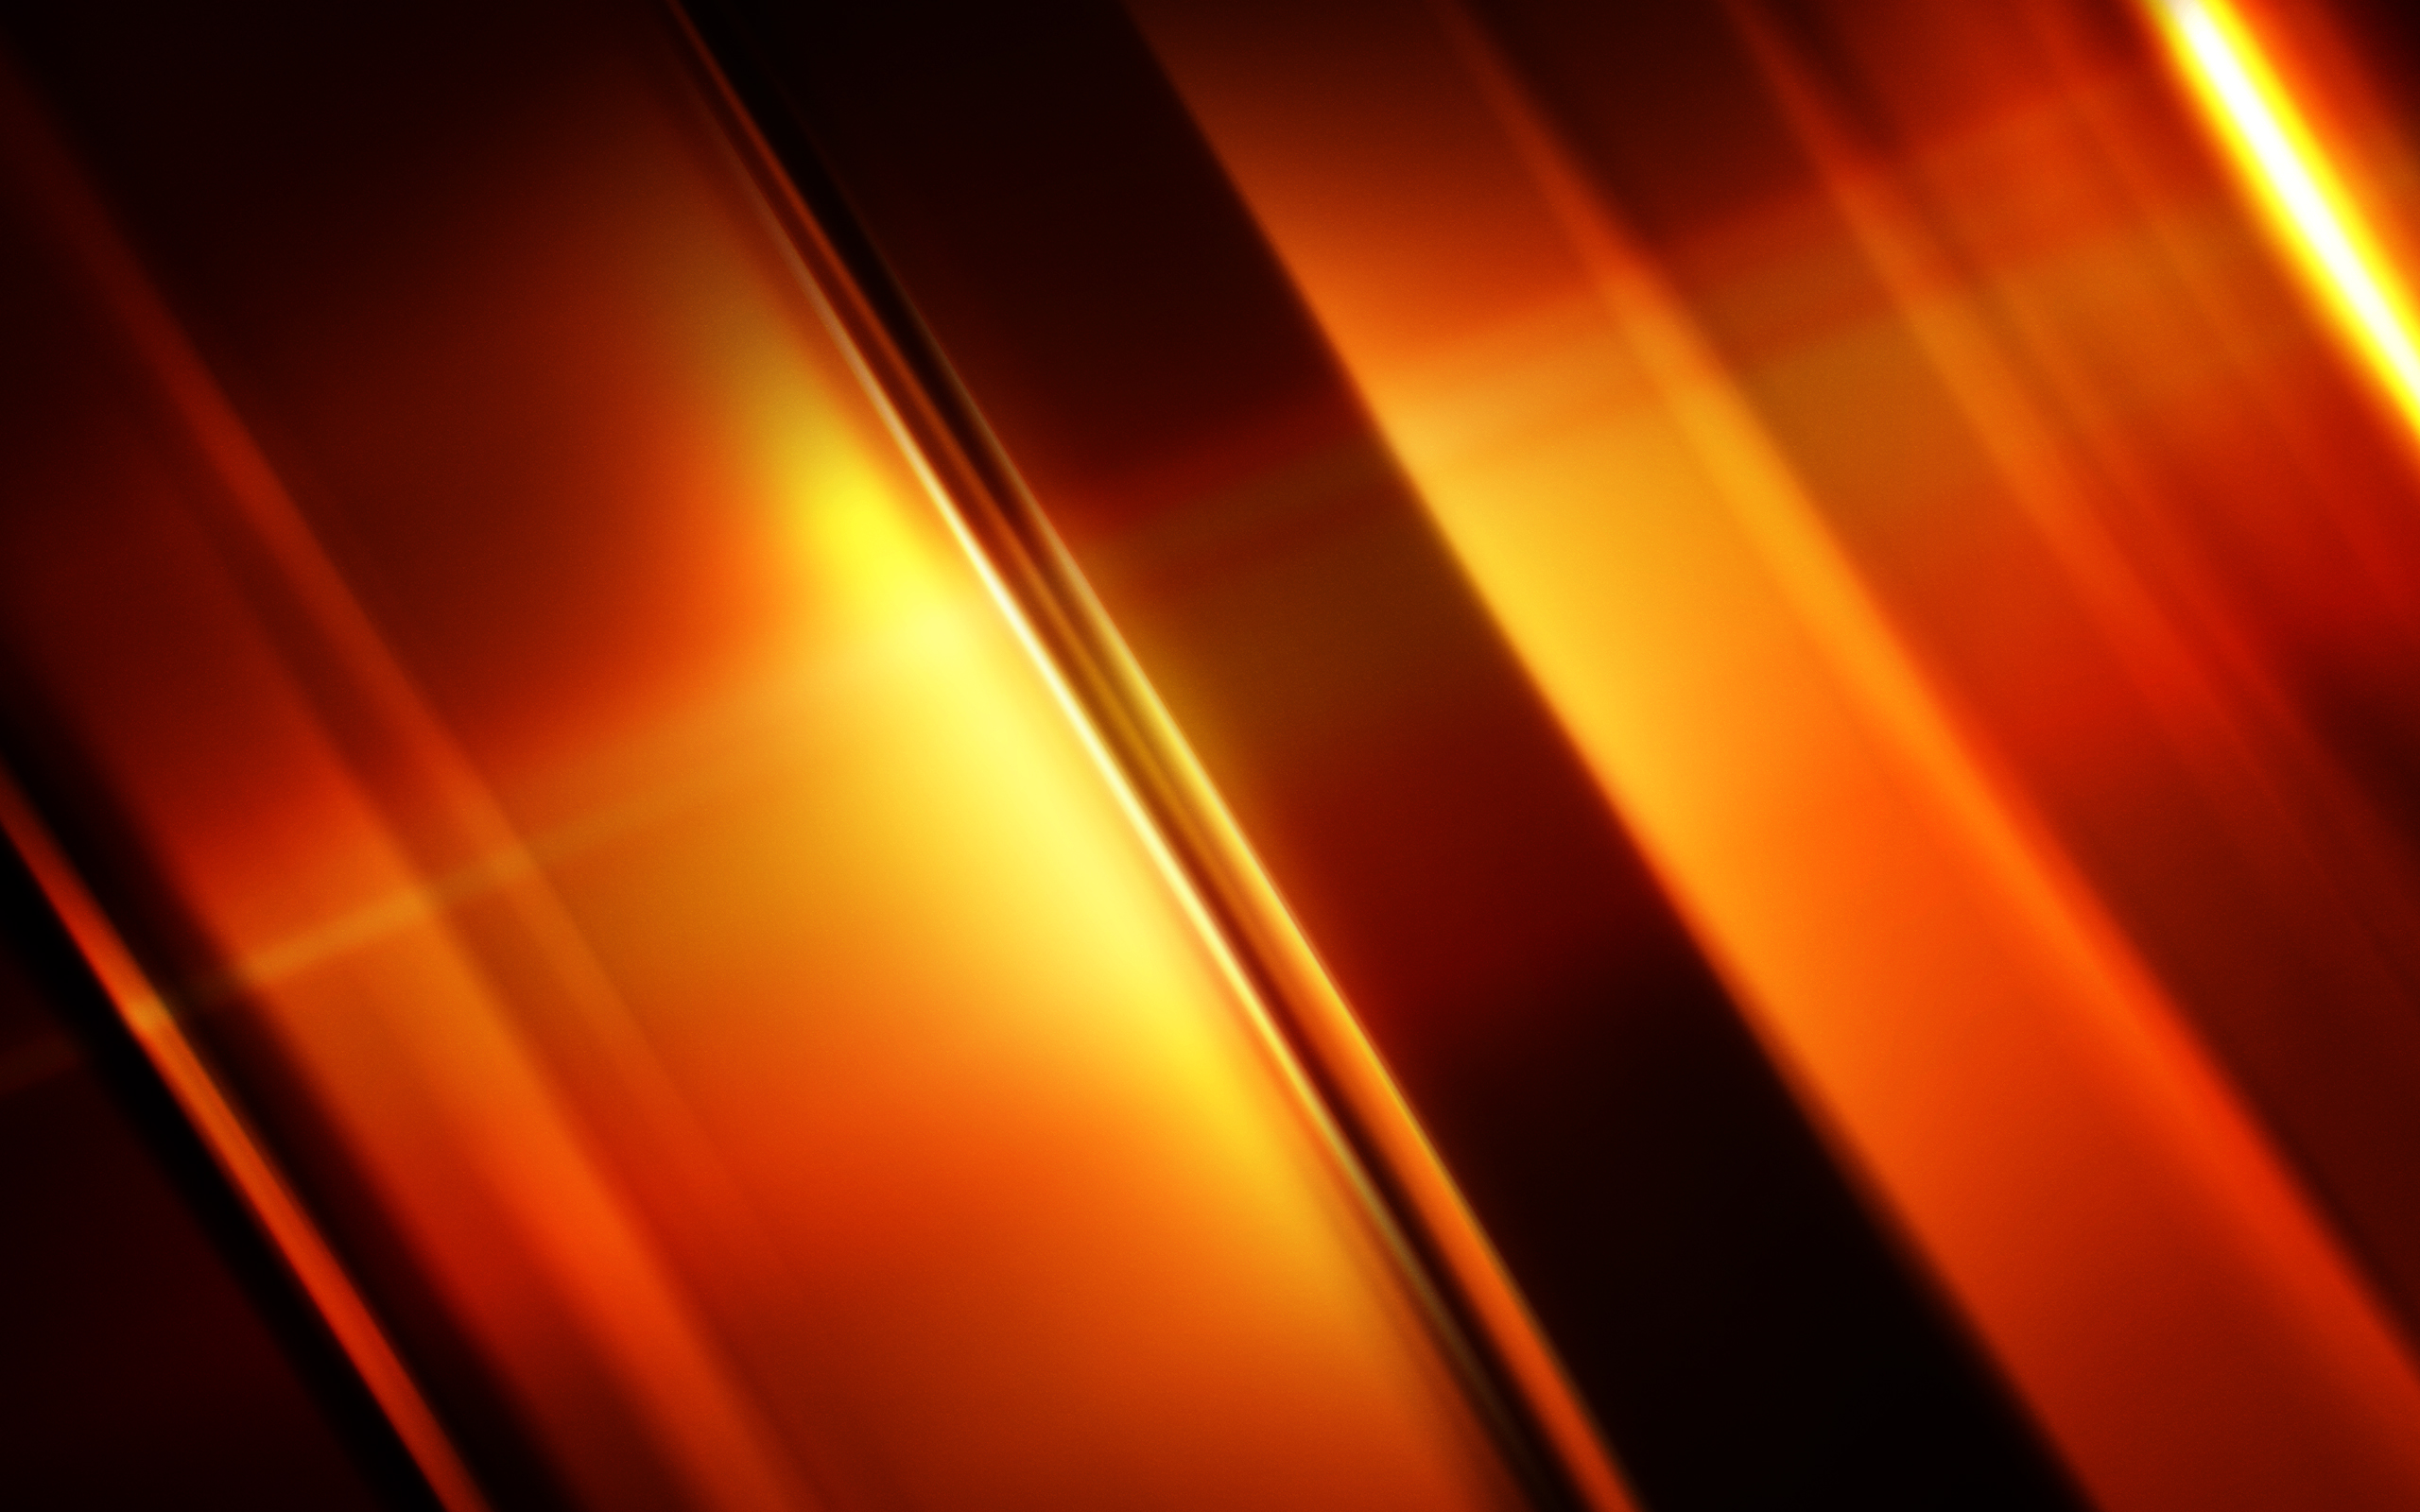  Orange  HD  Wallpaper  Background Image 2560x1600 ID 